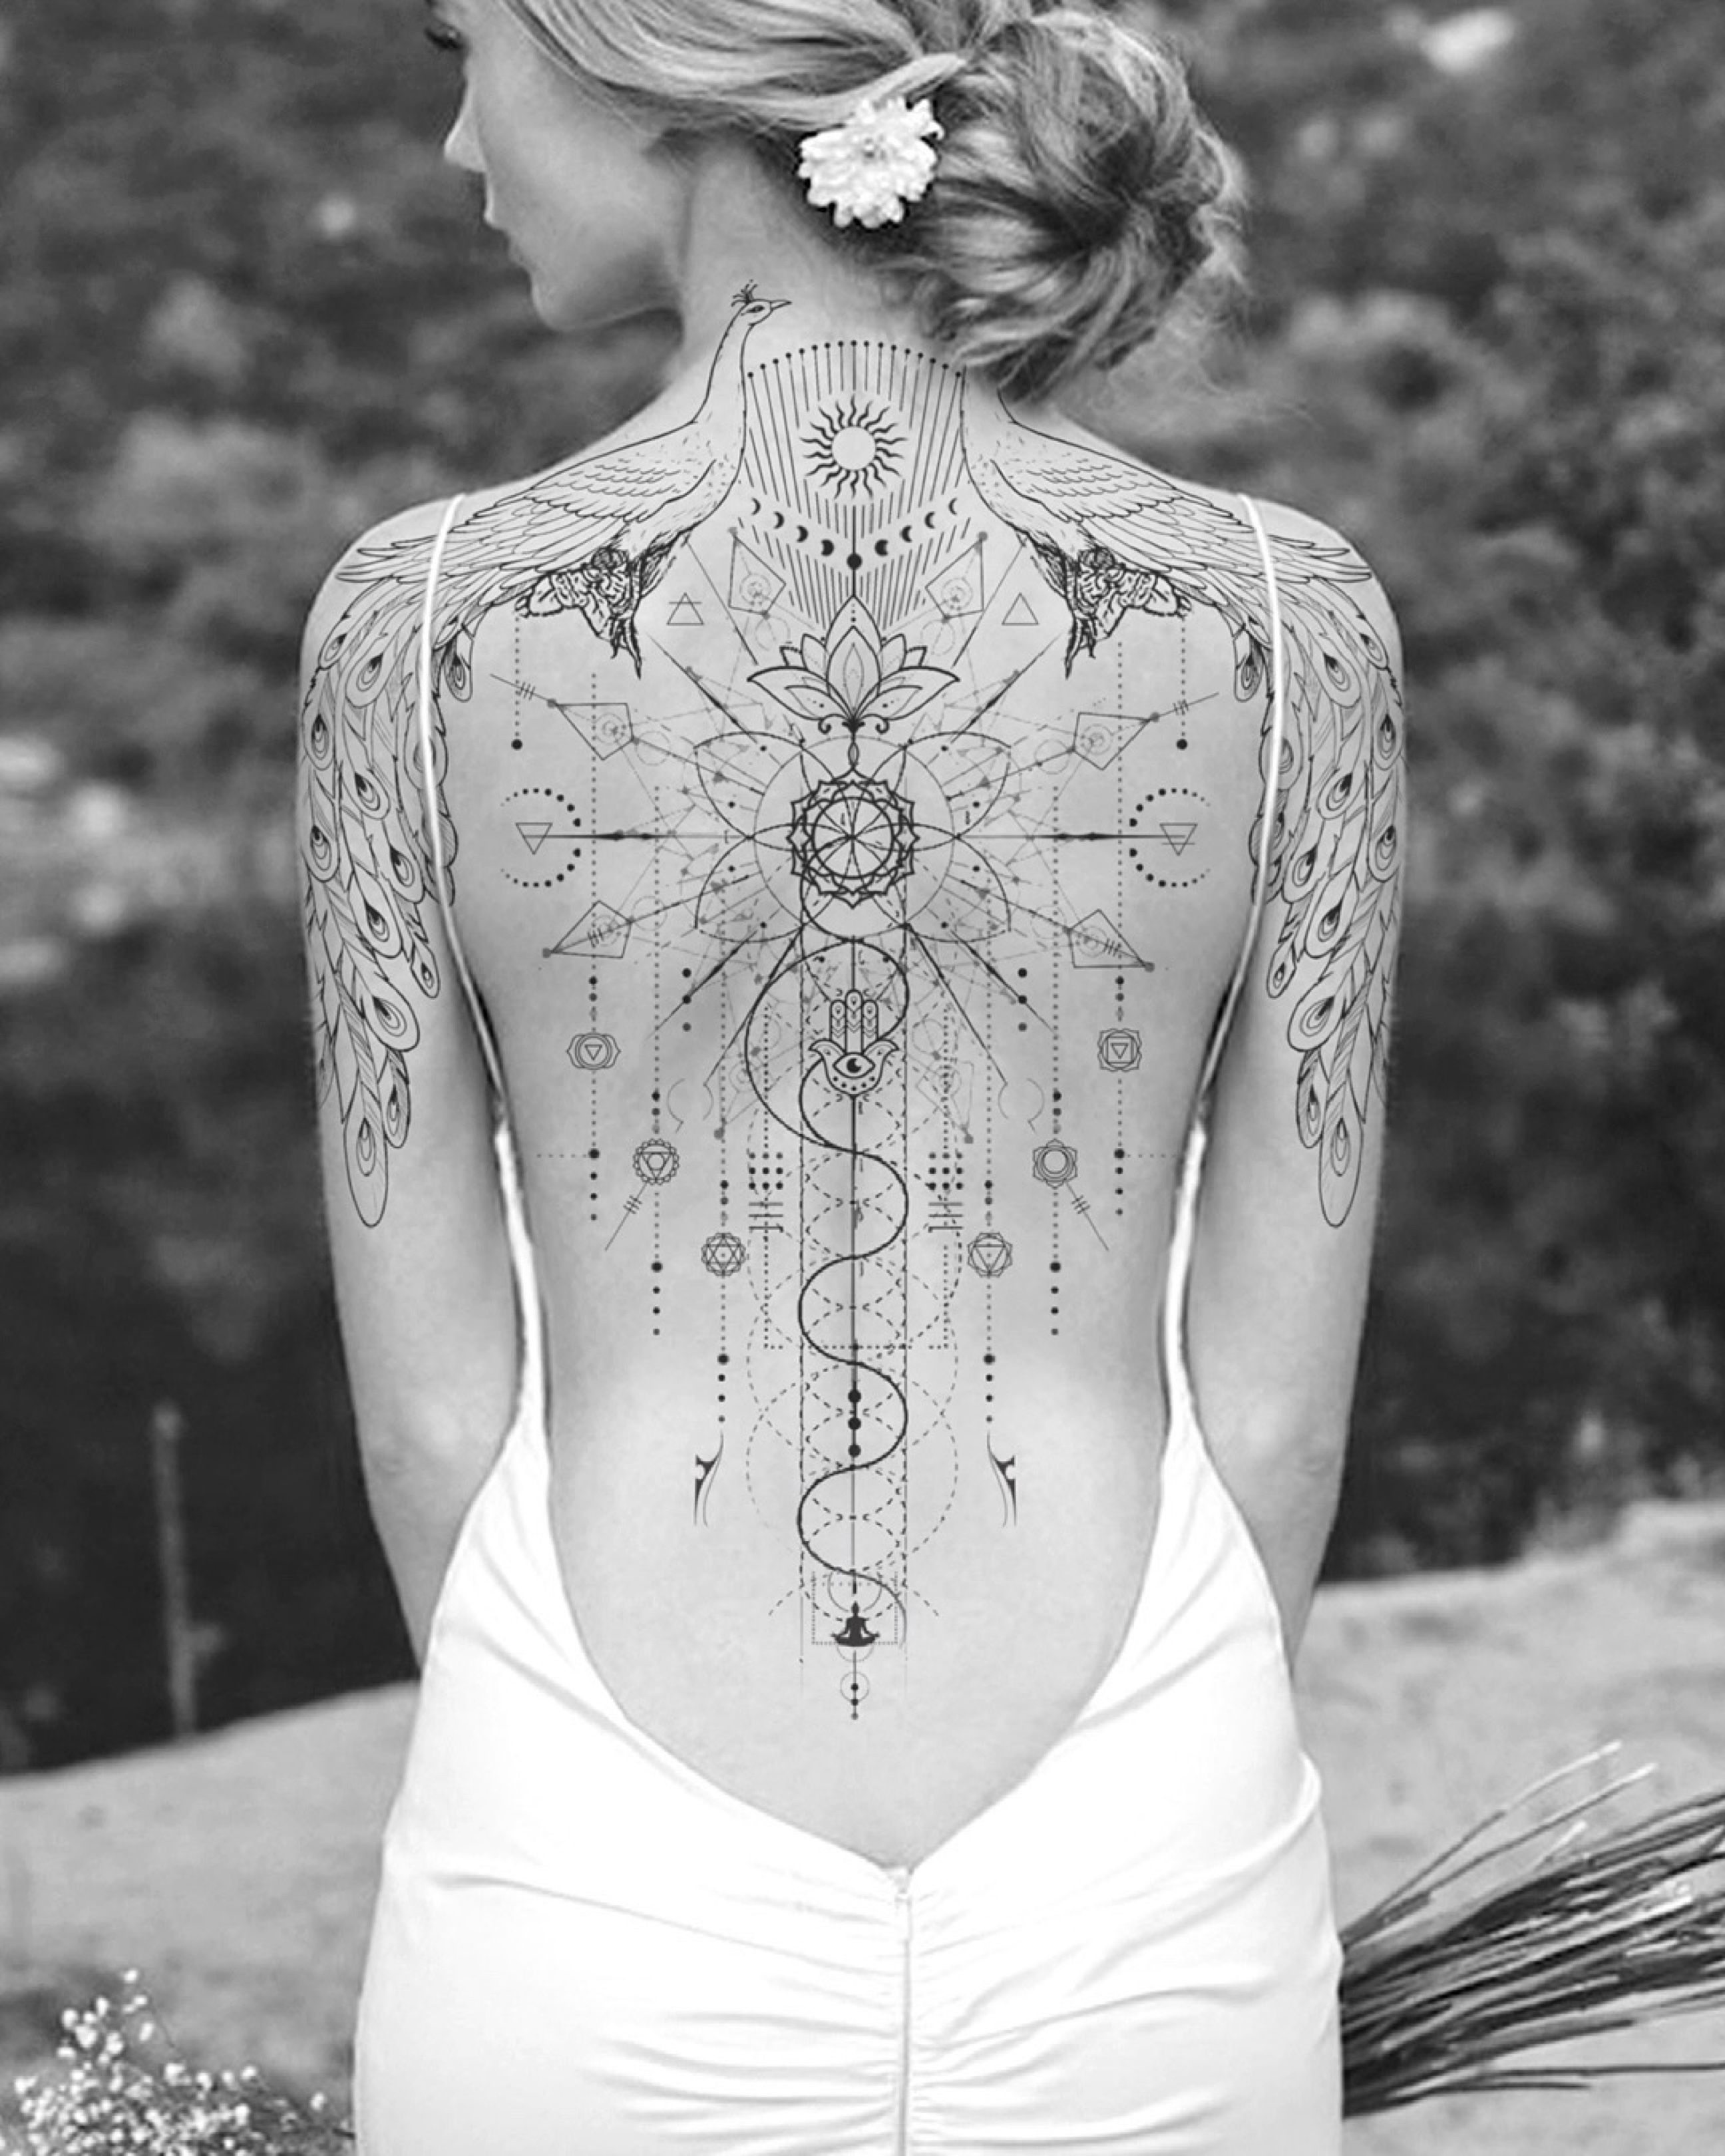 9 Powerful Spiritual Tattoo Designs to Awaken the Soul